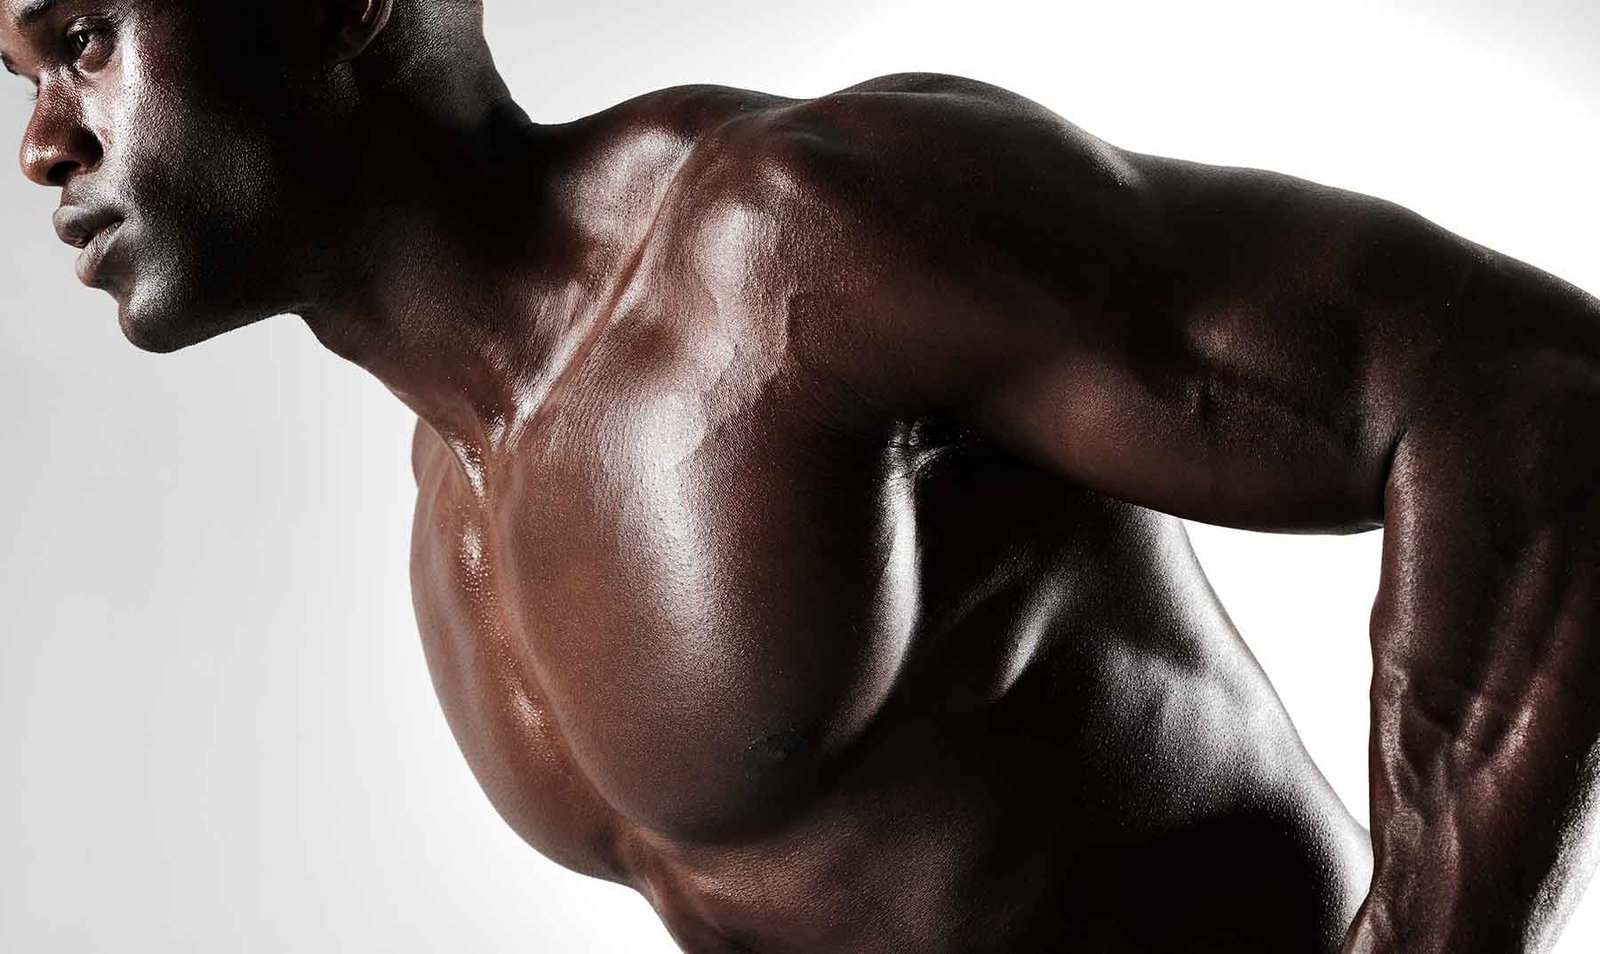 bodybuilder-with-muscular-physique-2021-08-26-19-58-27-utc-1.jpg